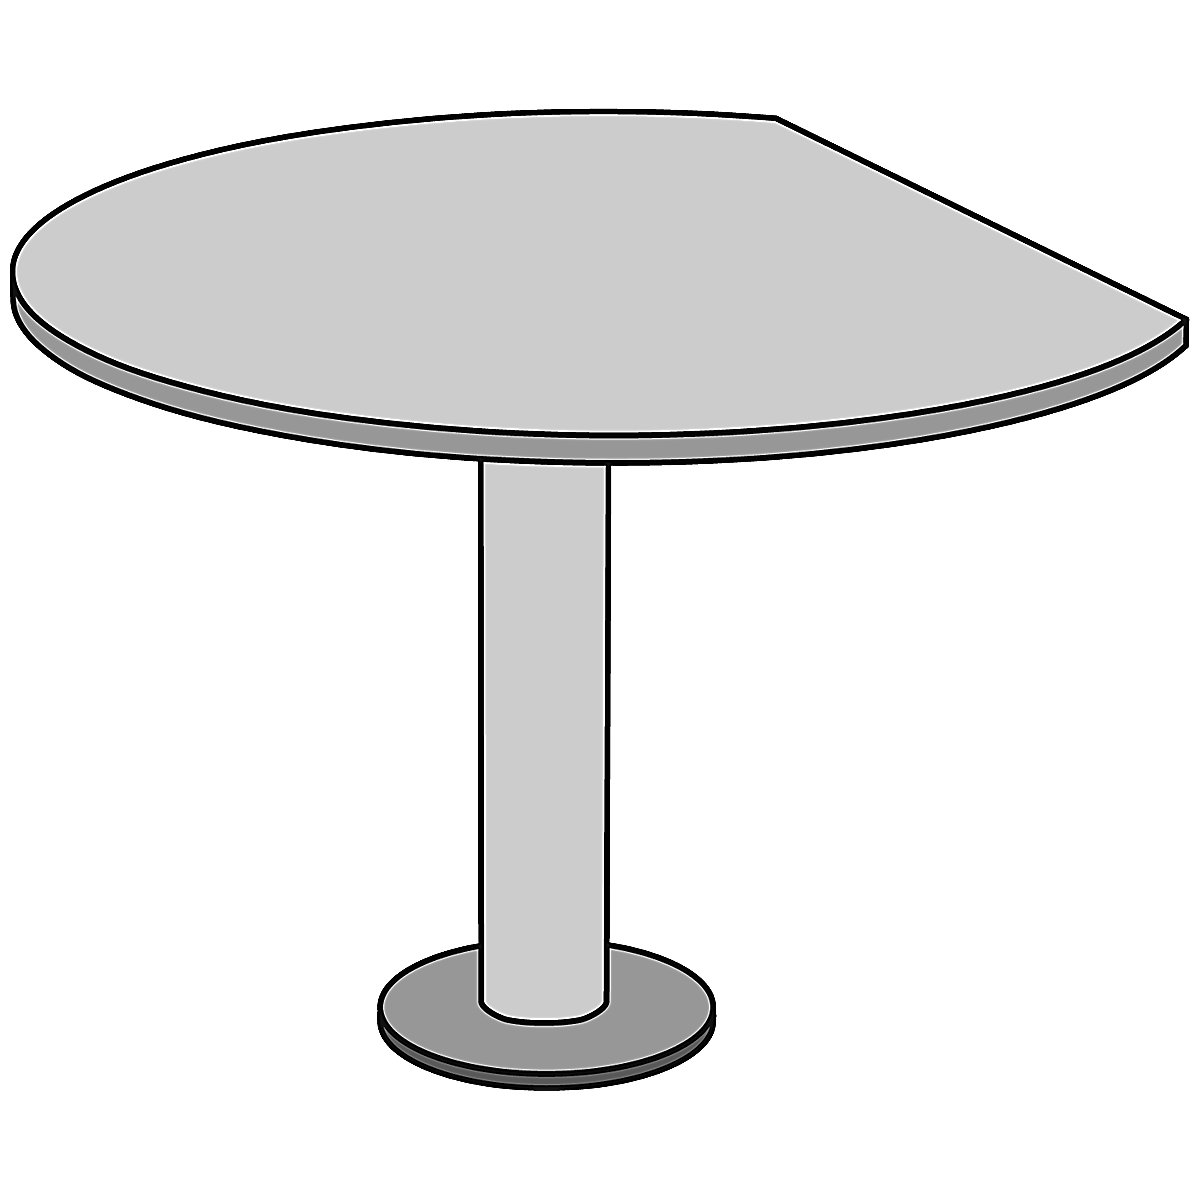 Table additionnel STATUS - eurokraft pro